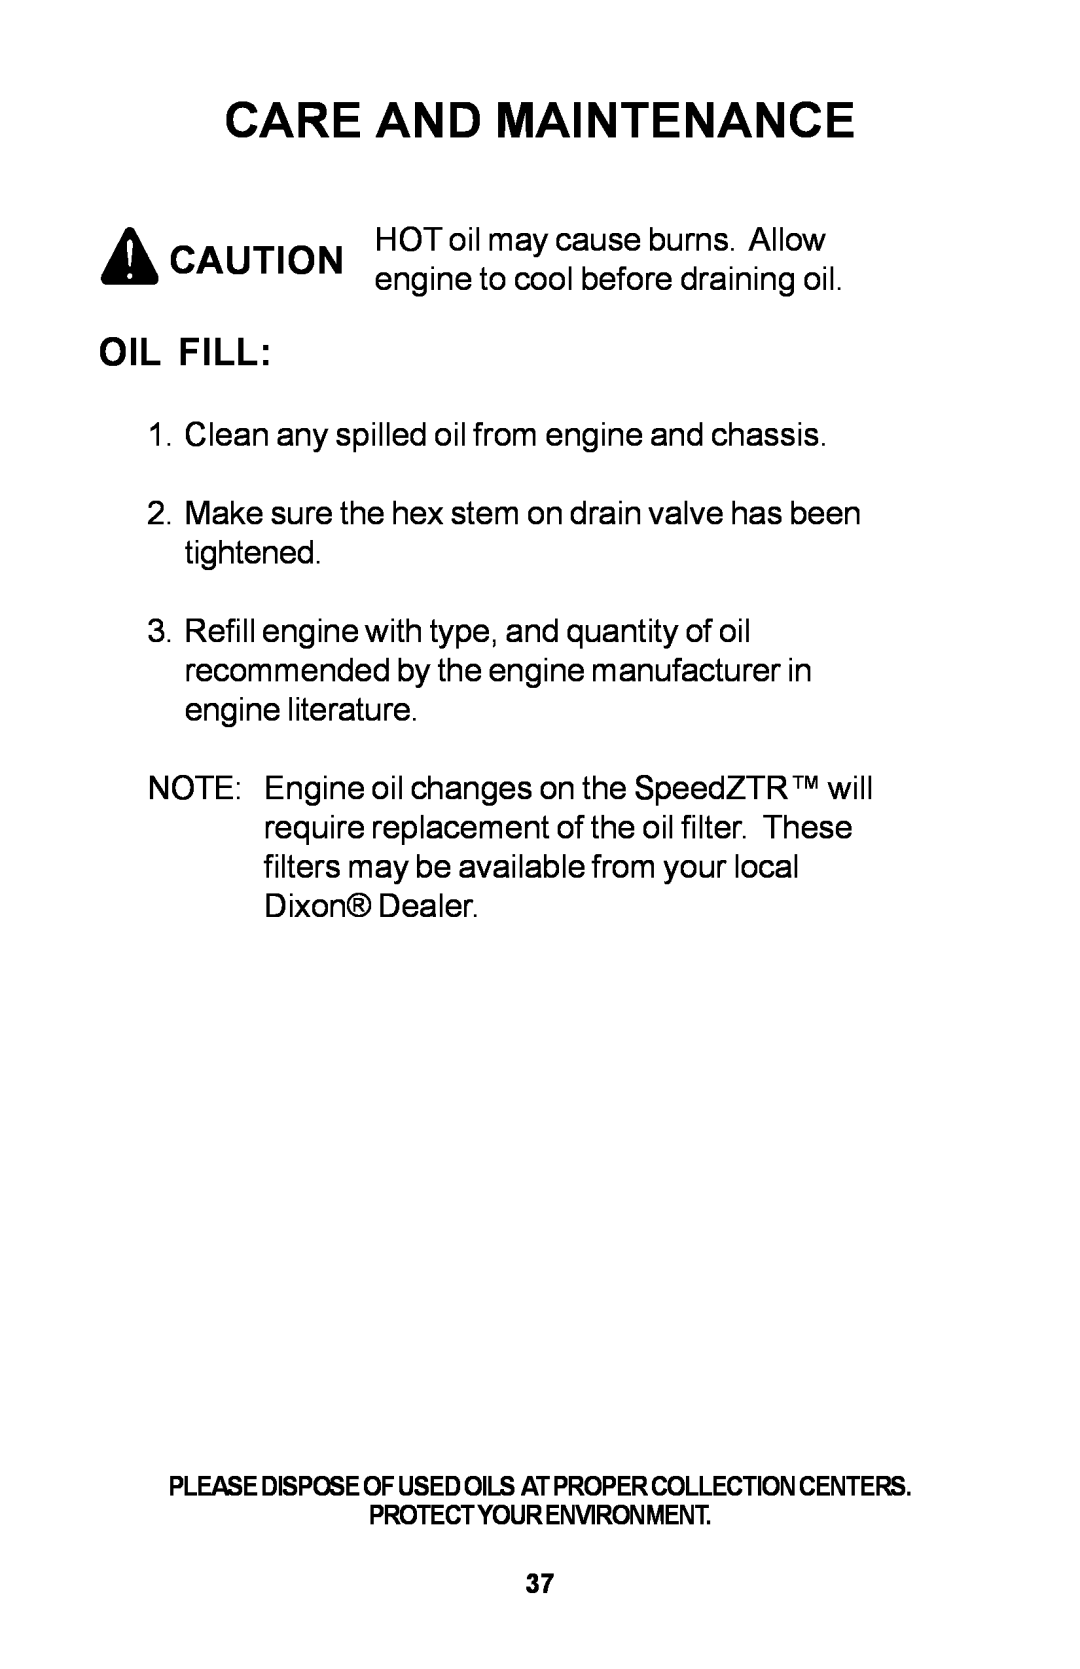 Dixon 30 manual Oil Fill, Care And Maintenance 